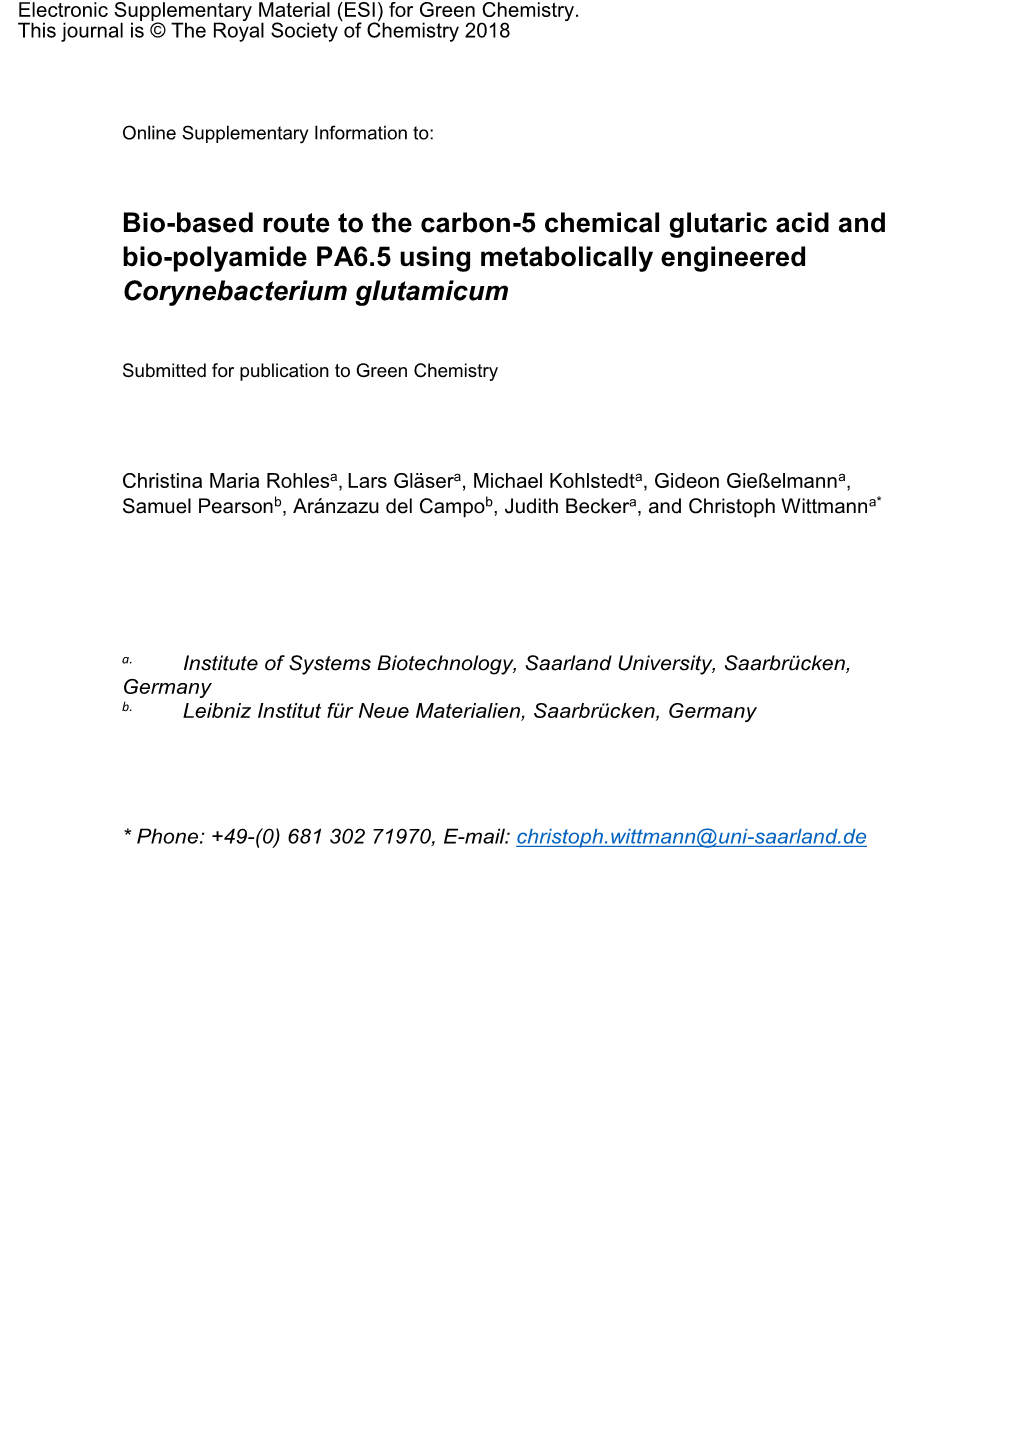 Bio-Based Route to the Carbon-5 Chemical Glutaric Acid and Bio-Polyamide PA6.5 Using Metabolically Engineered Corynebacterium Glutamicum